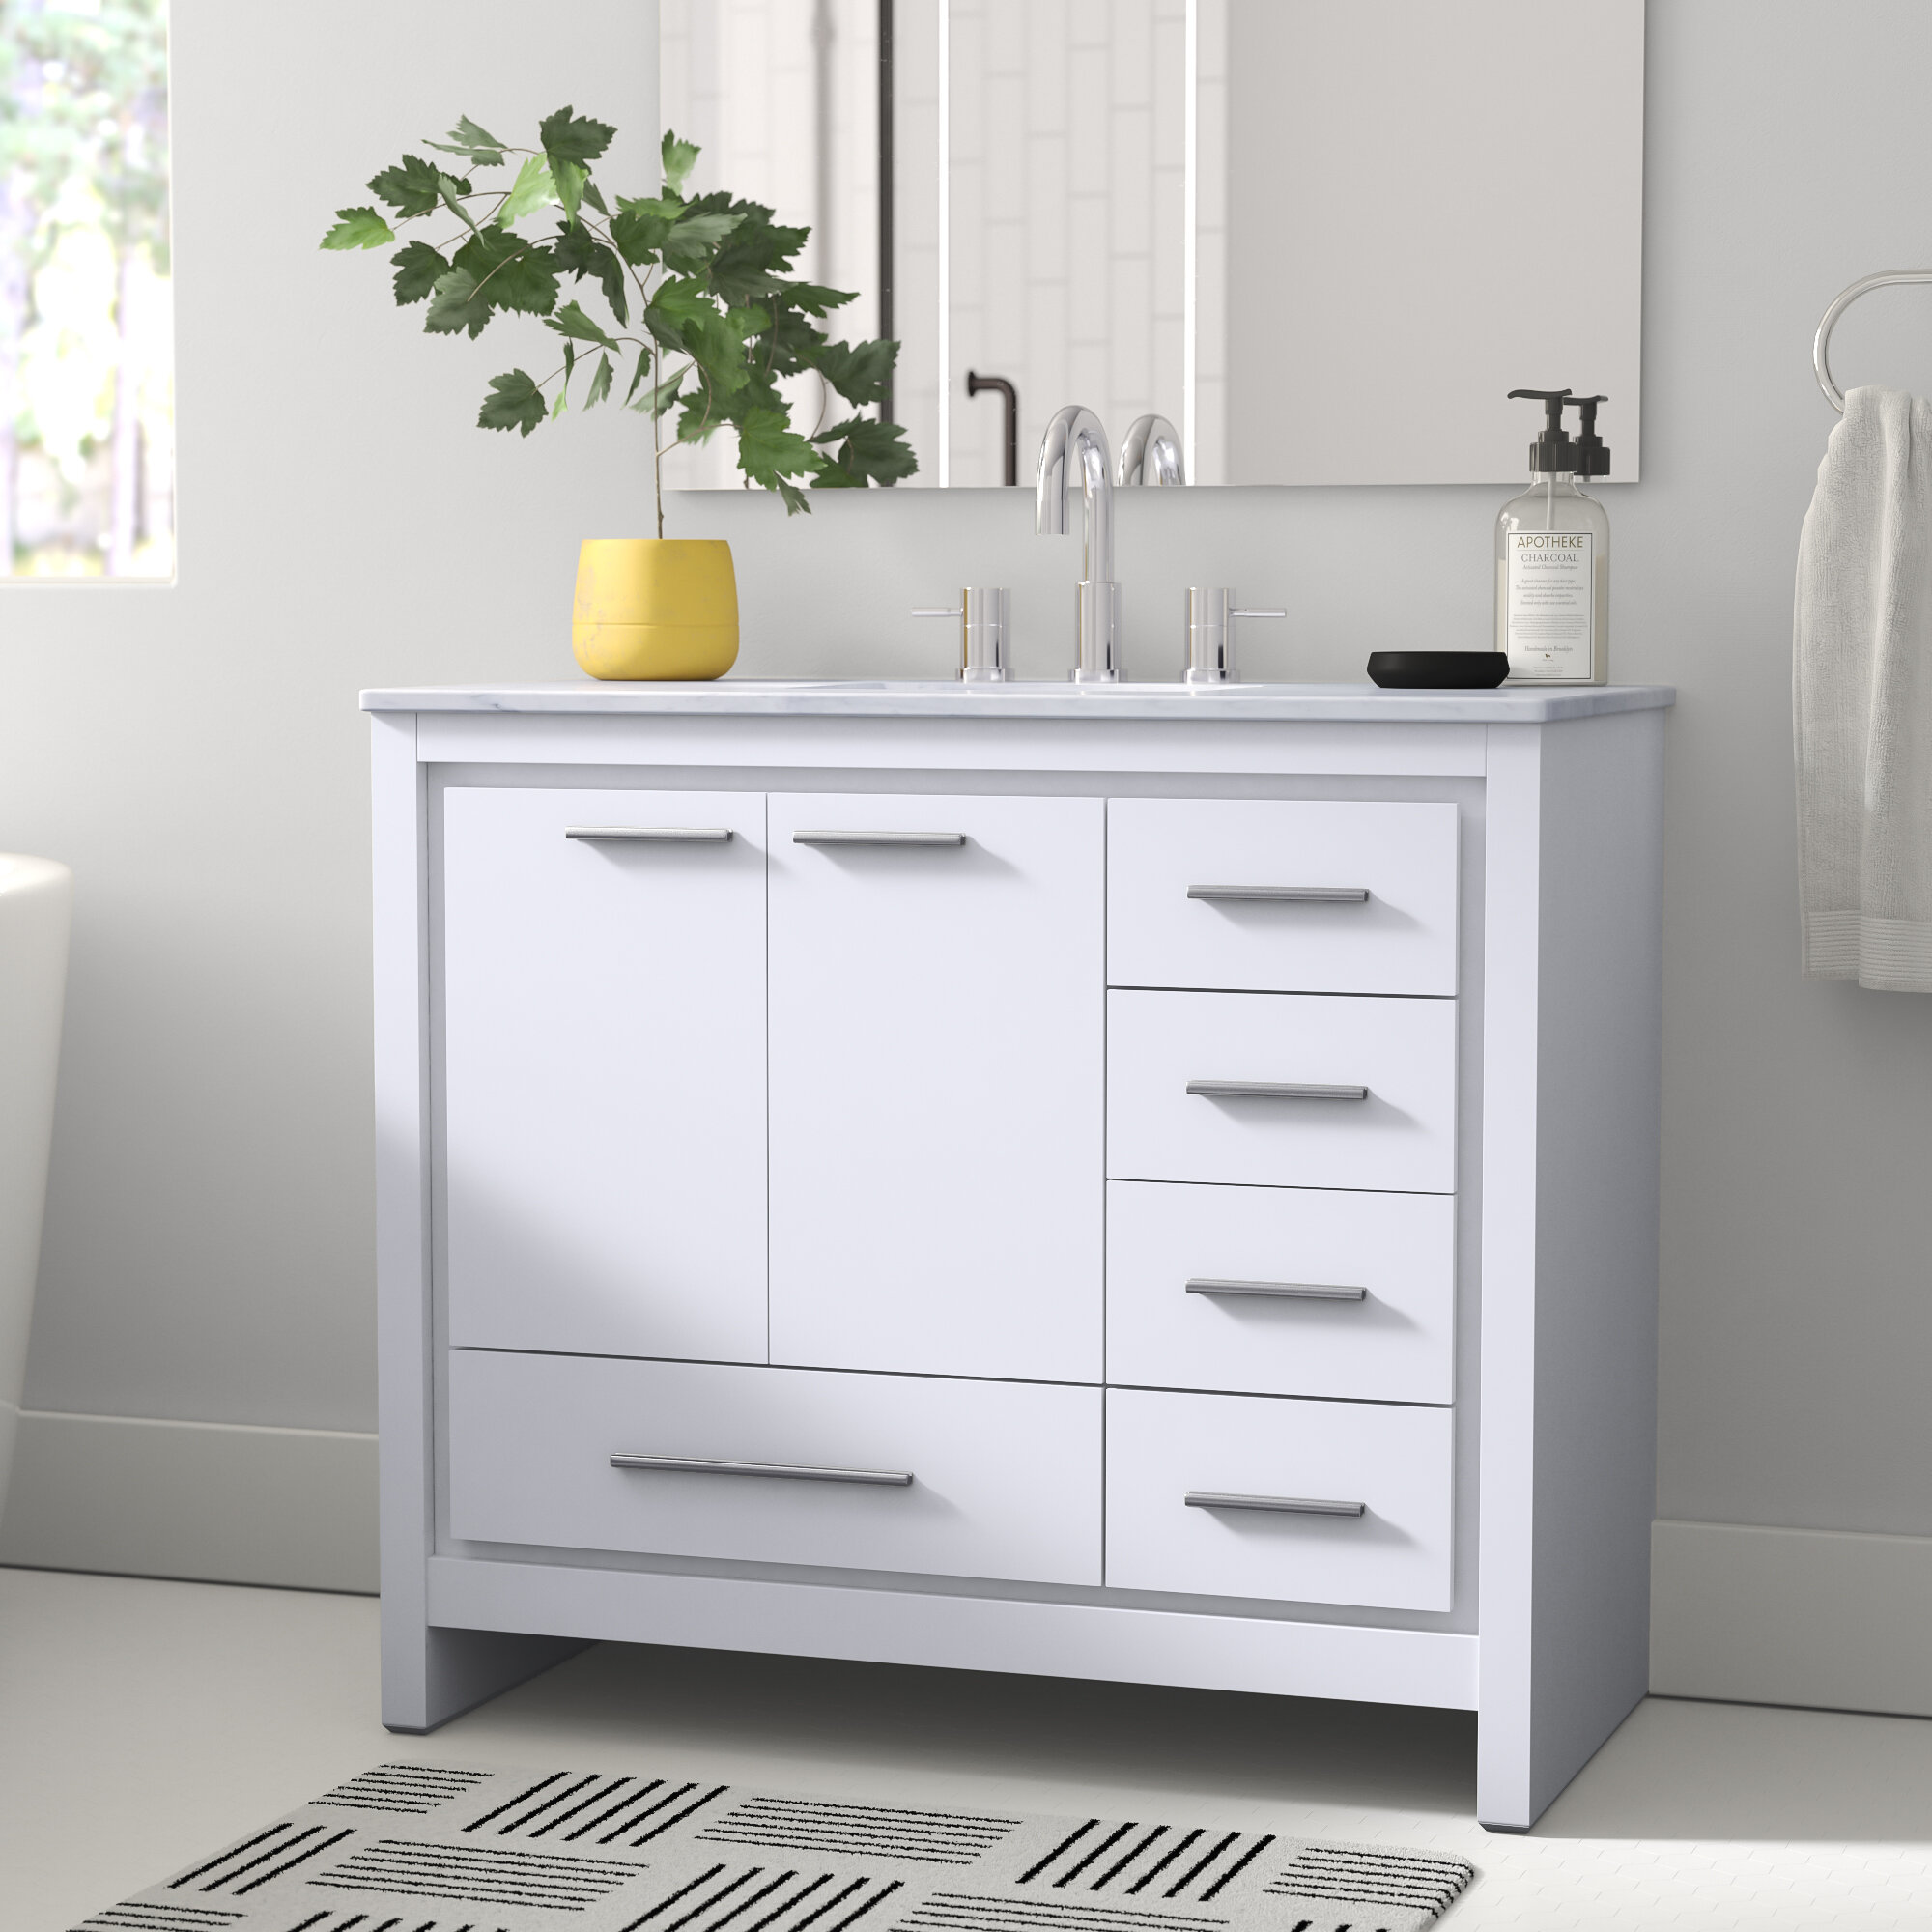 Zipcode Design Broadview 40 Single Bathroom Vanity Set Reviews